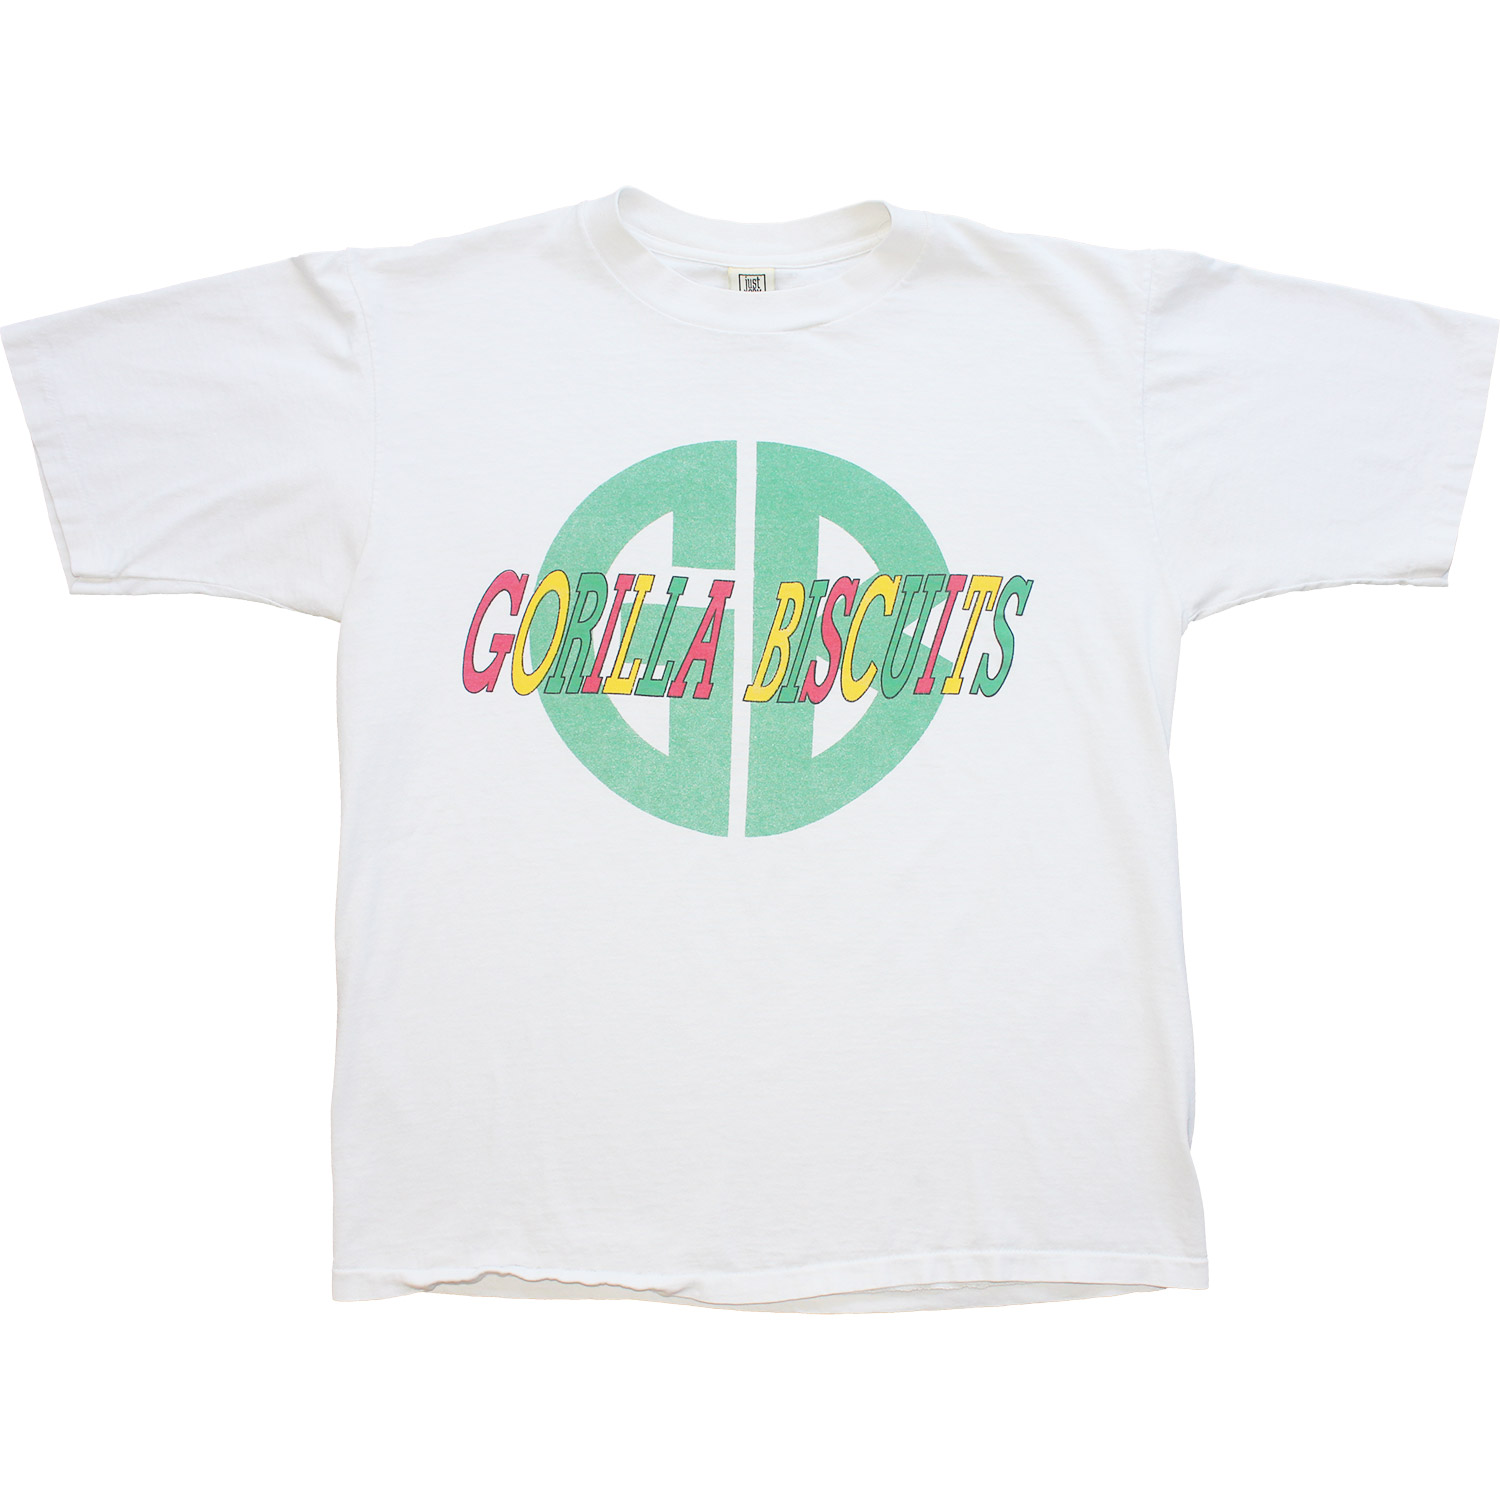 Gorilla Biscuits Start Today T-shirt, Front